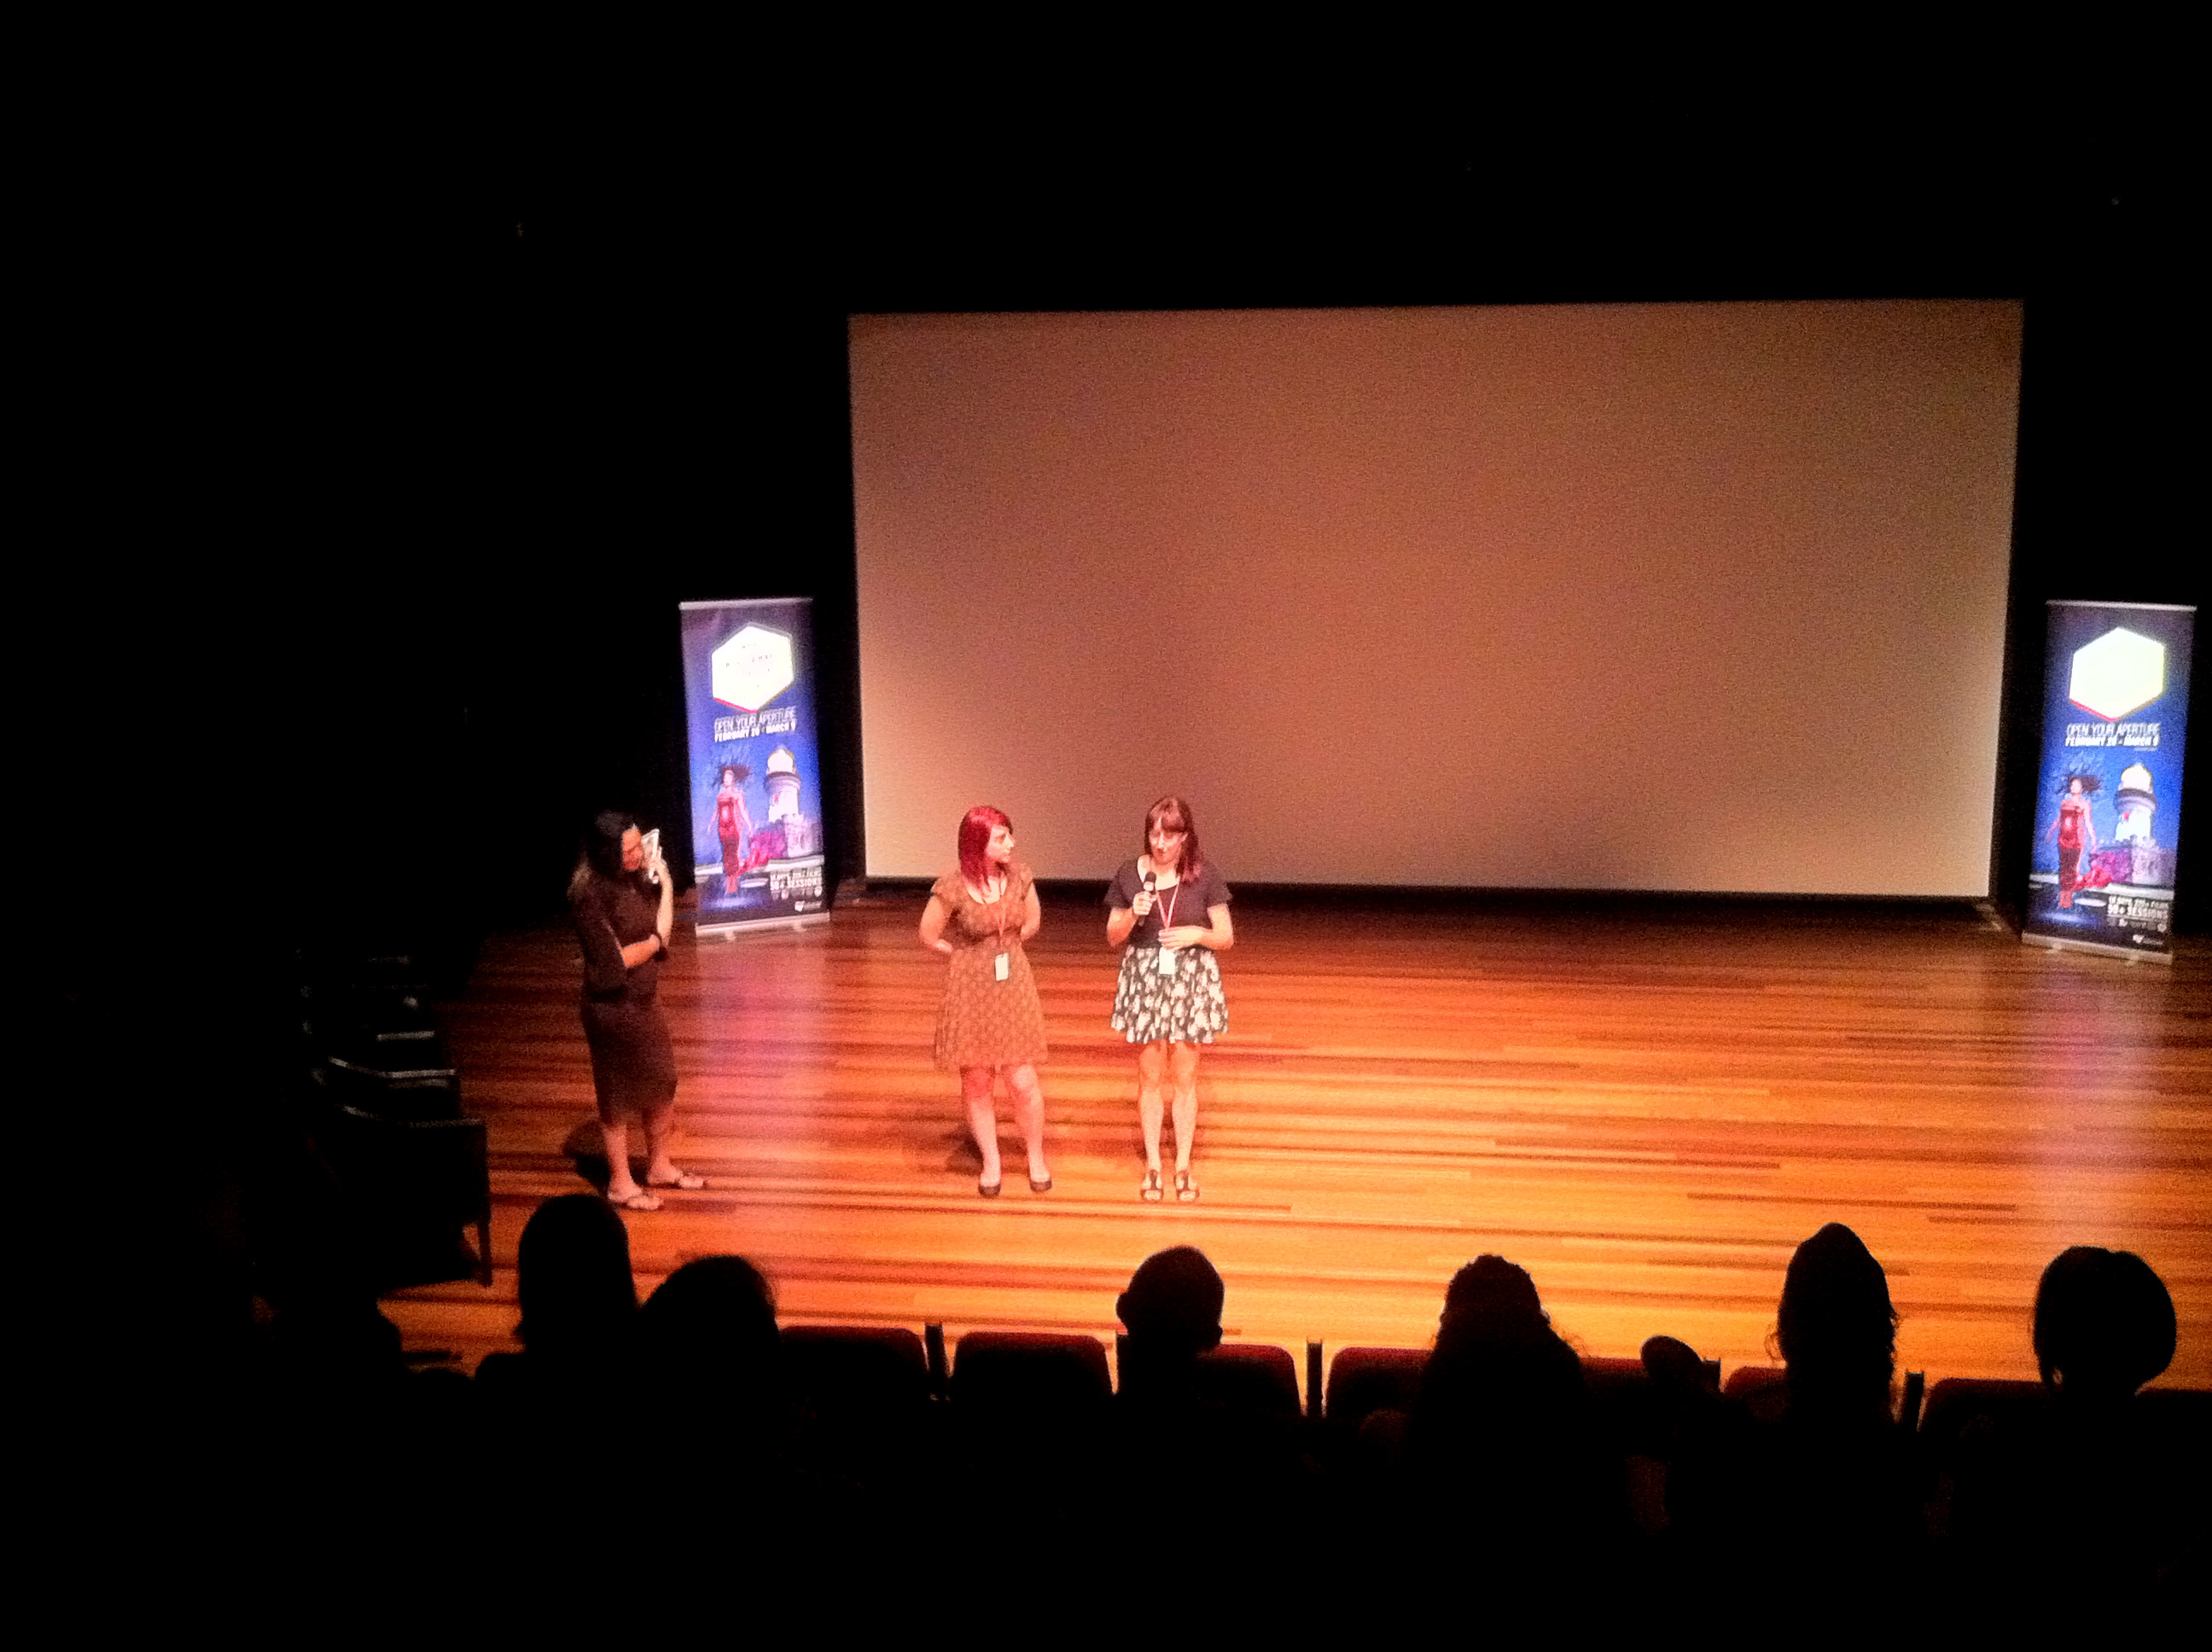 Speaking at Byron Bay International Film Festival